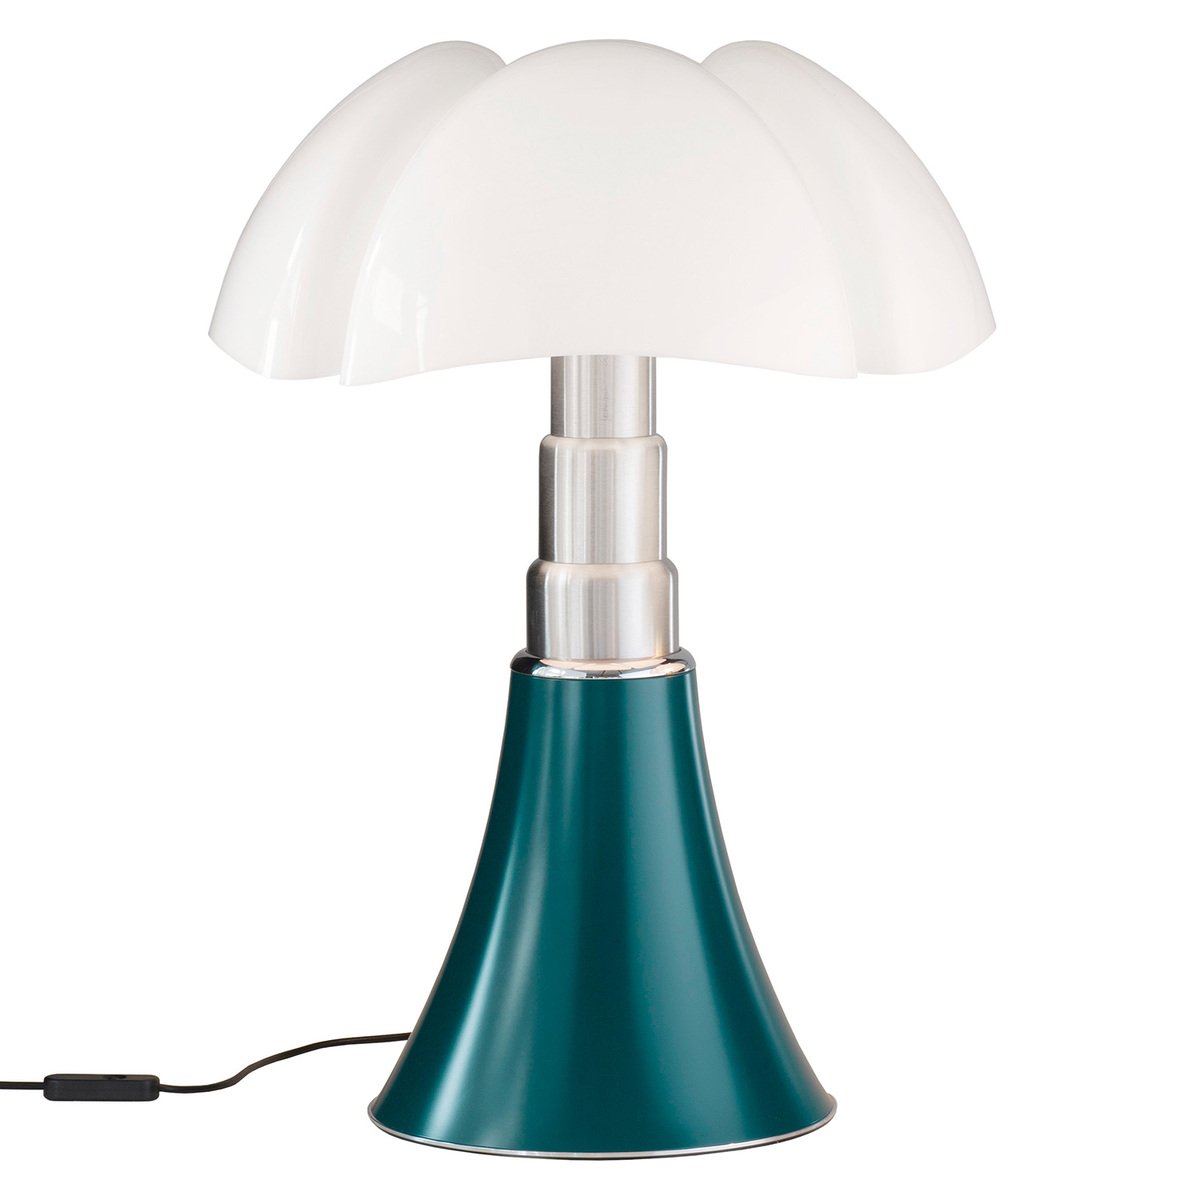 Vertrappen Haast je kolf Martinelli Luce Pipistrello Medium table lamp, dimmable, agave green |  Finnish Design Shop